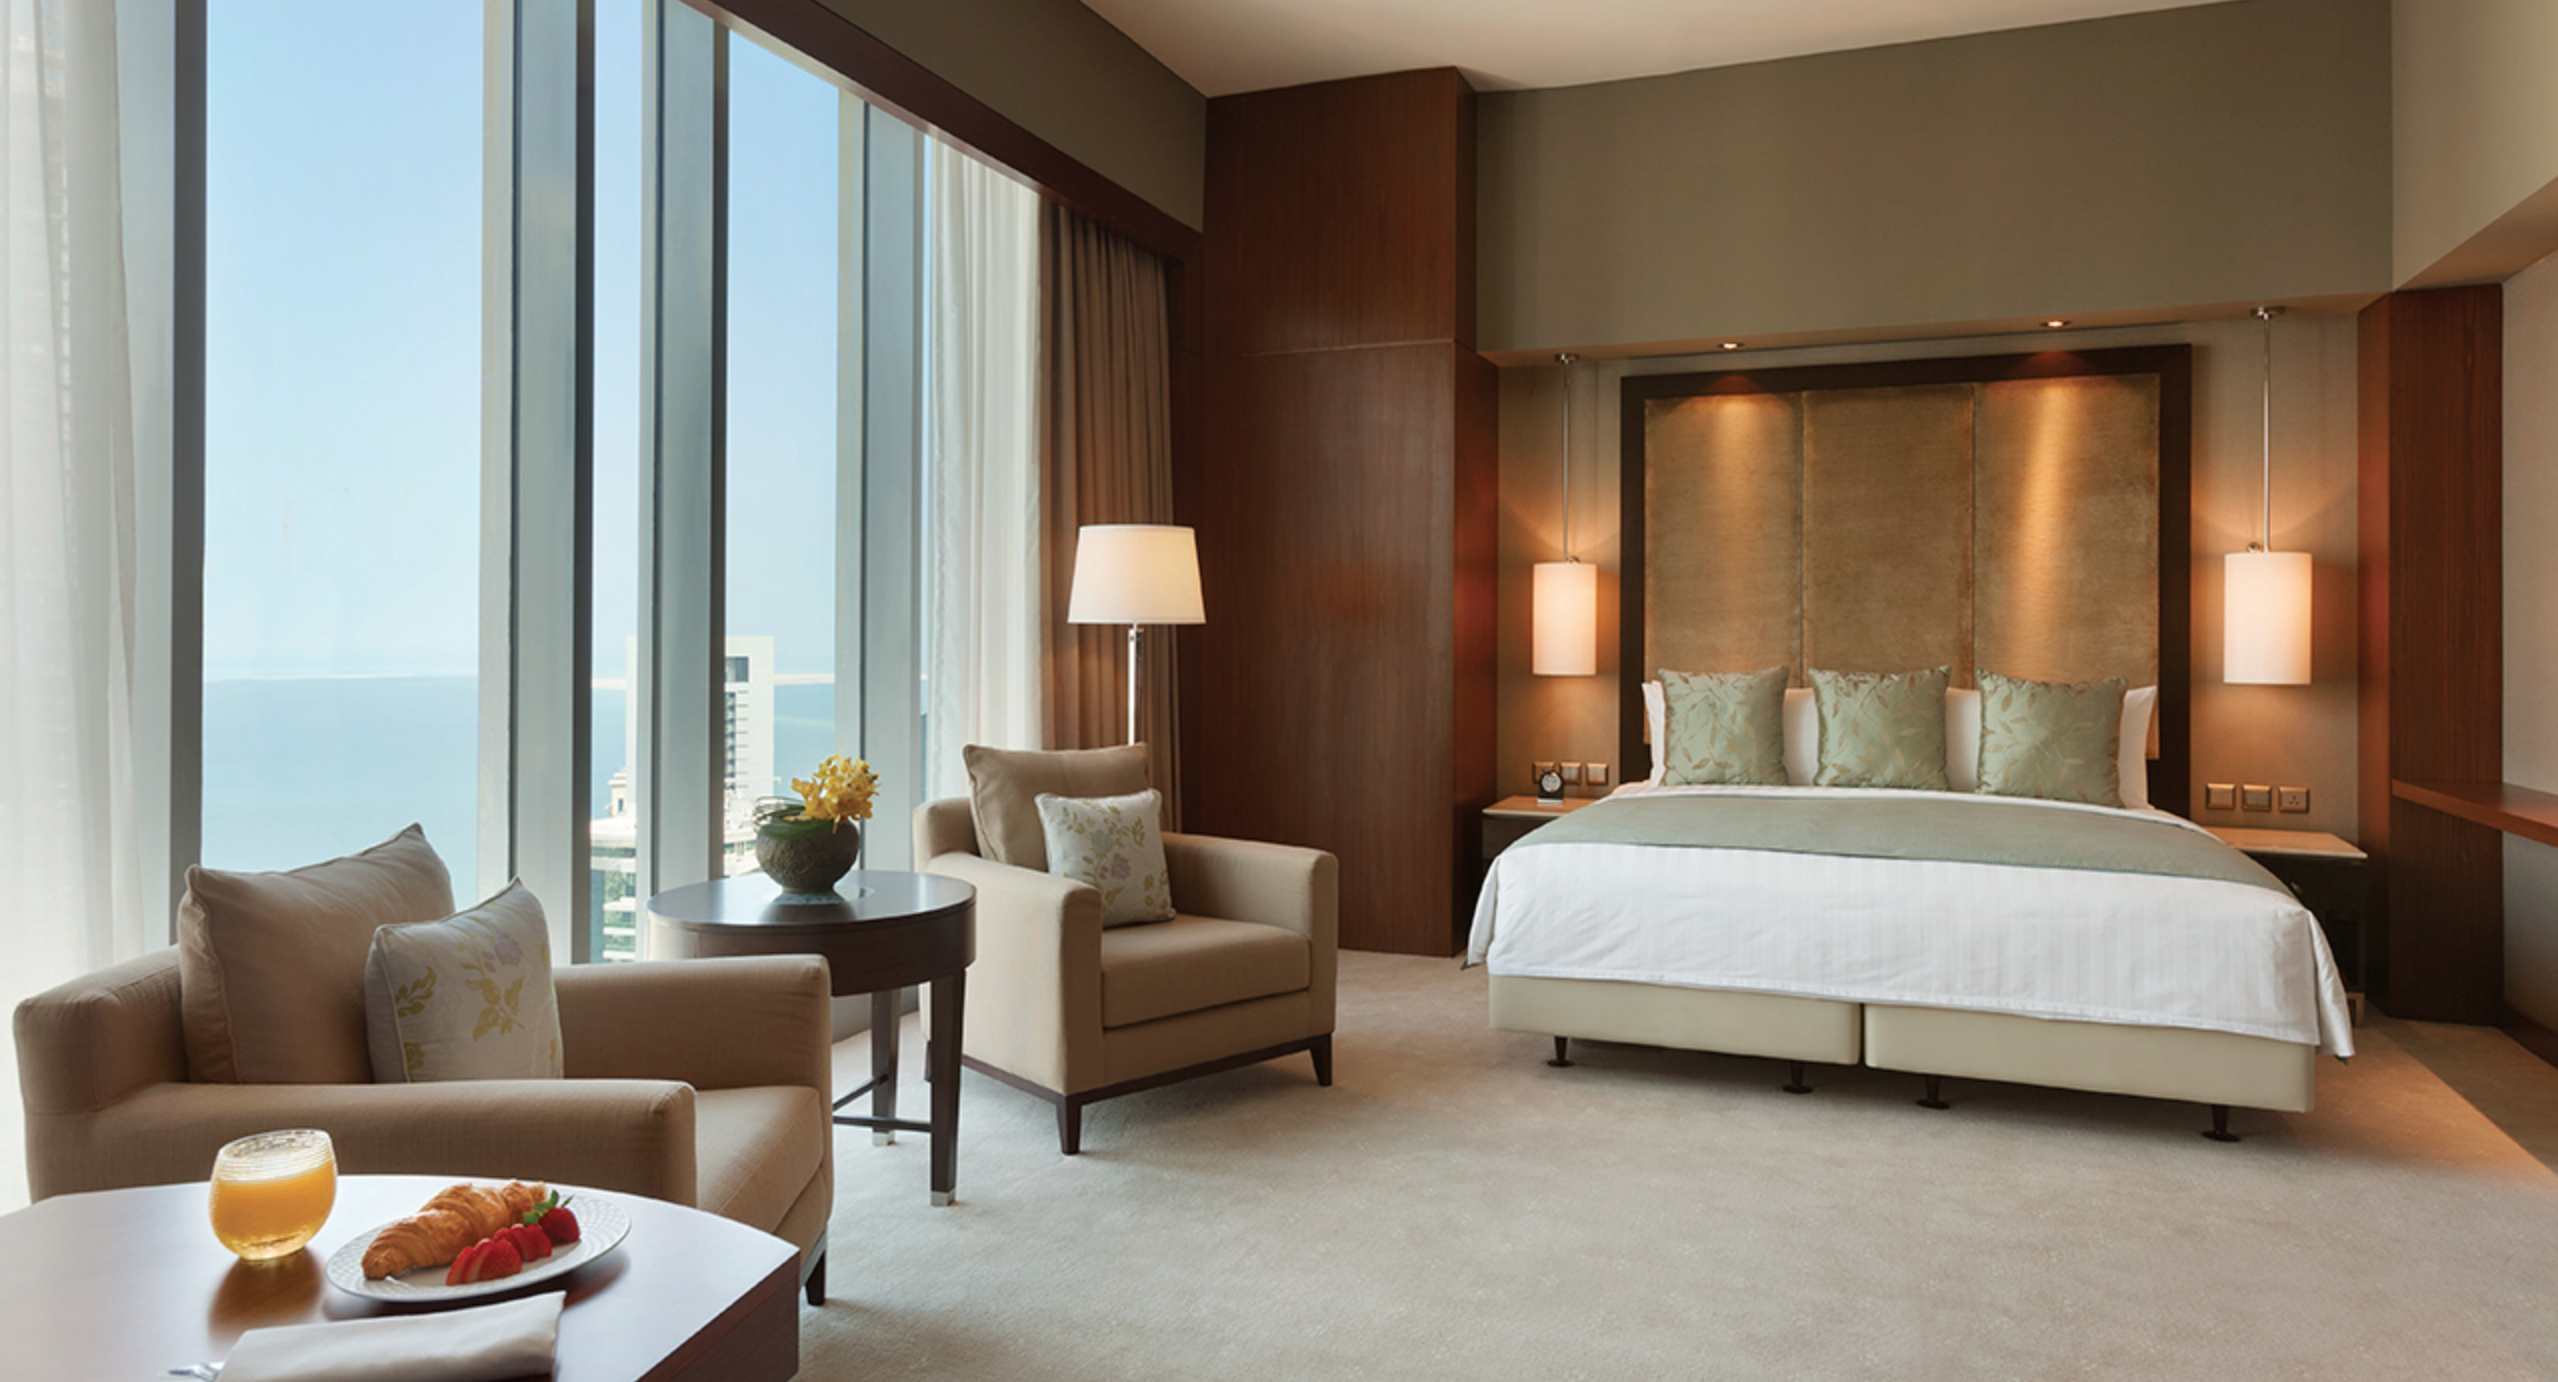 Chambre Deluxe de l'Hôtel 5 étoiles Shangri-La à Doha